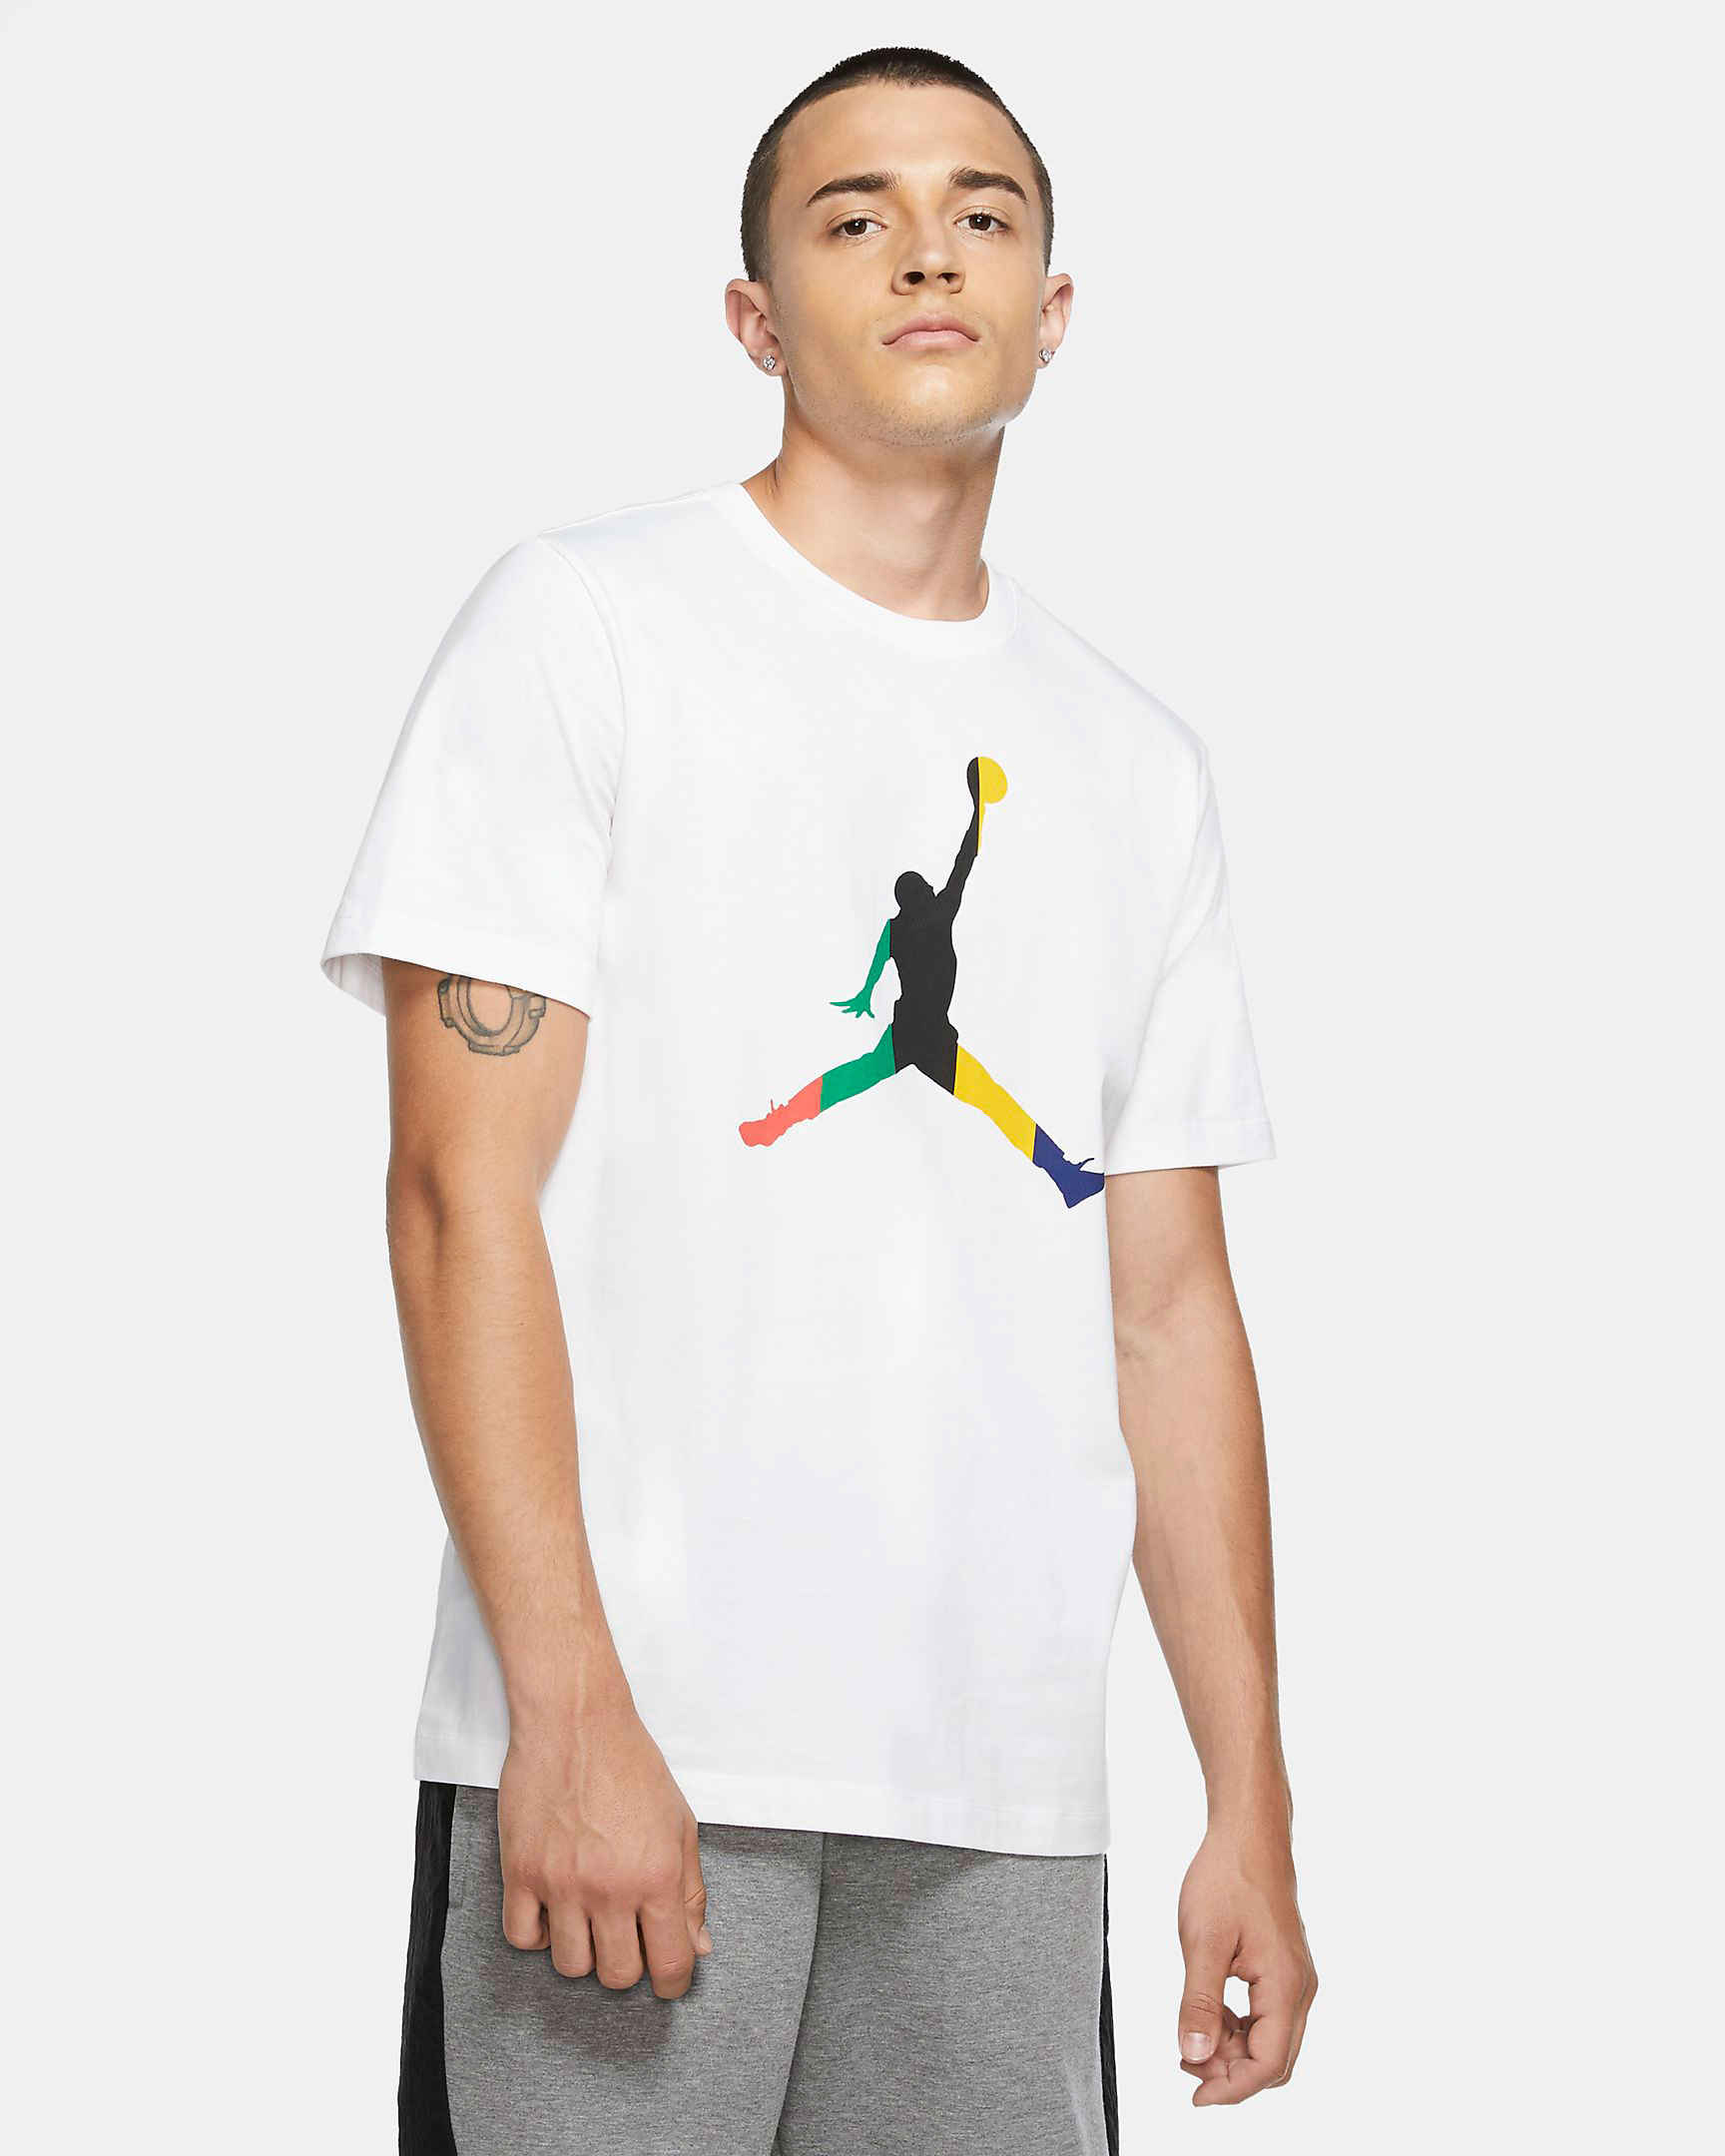 jordan-sport-dna-jumpman-shirt-white-multi-color-1